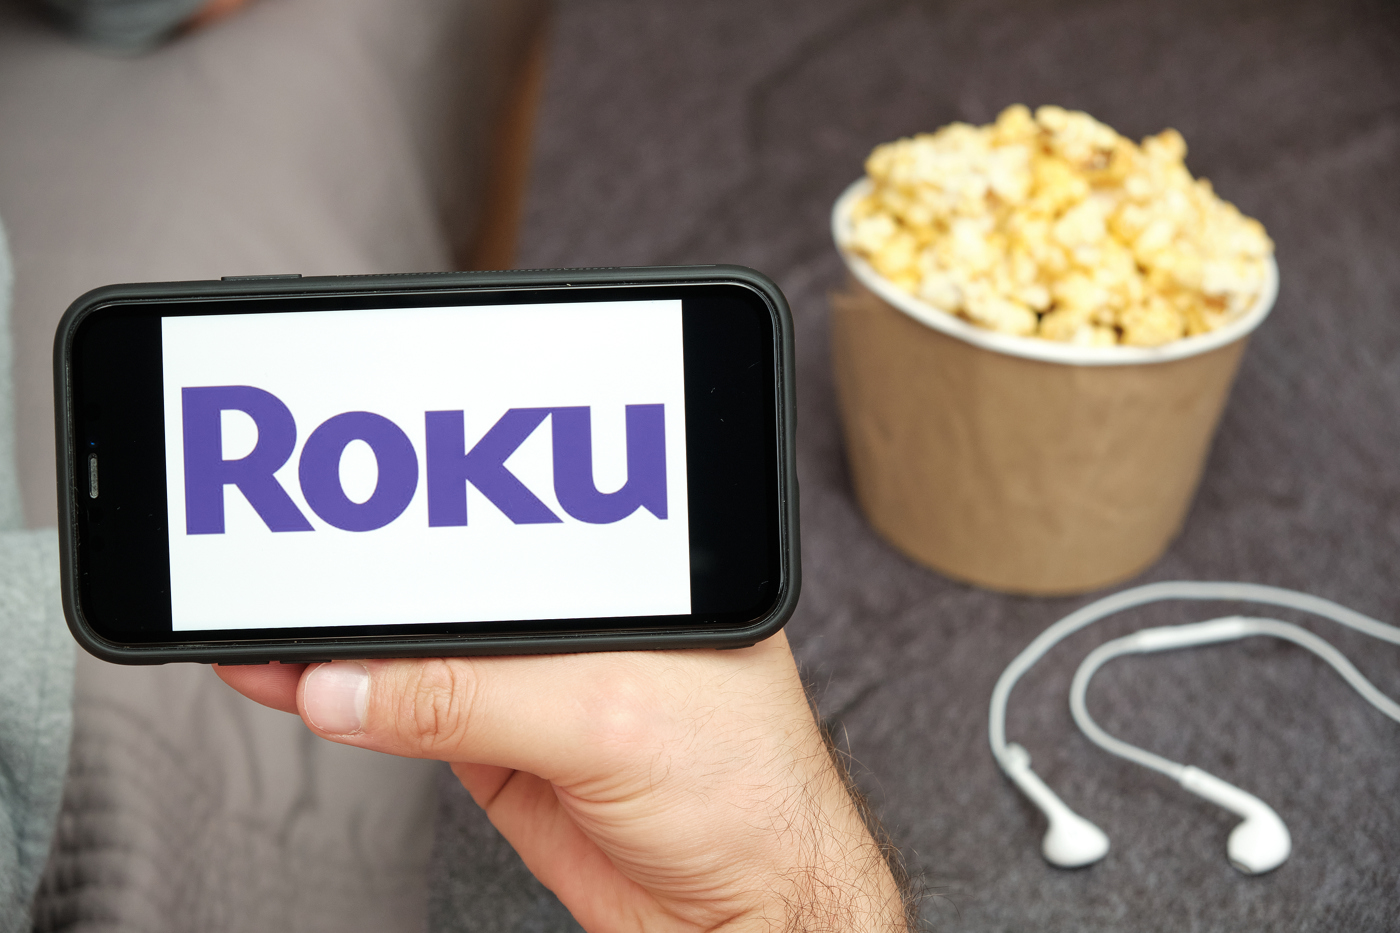 Roku stock, ROKU stock, streaming service stocks